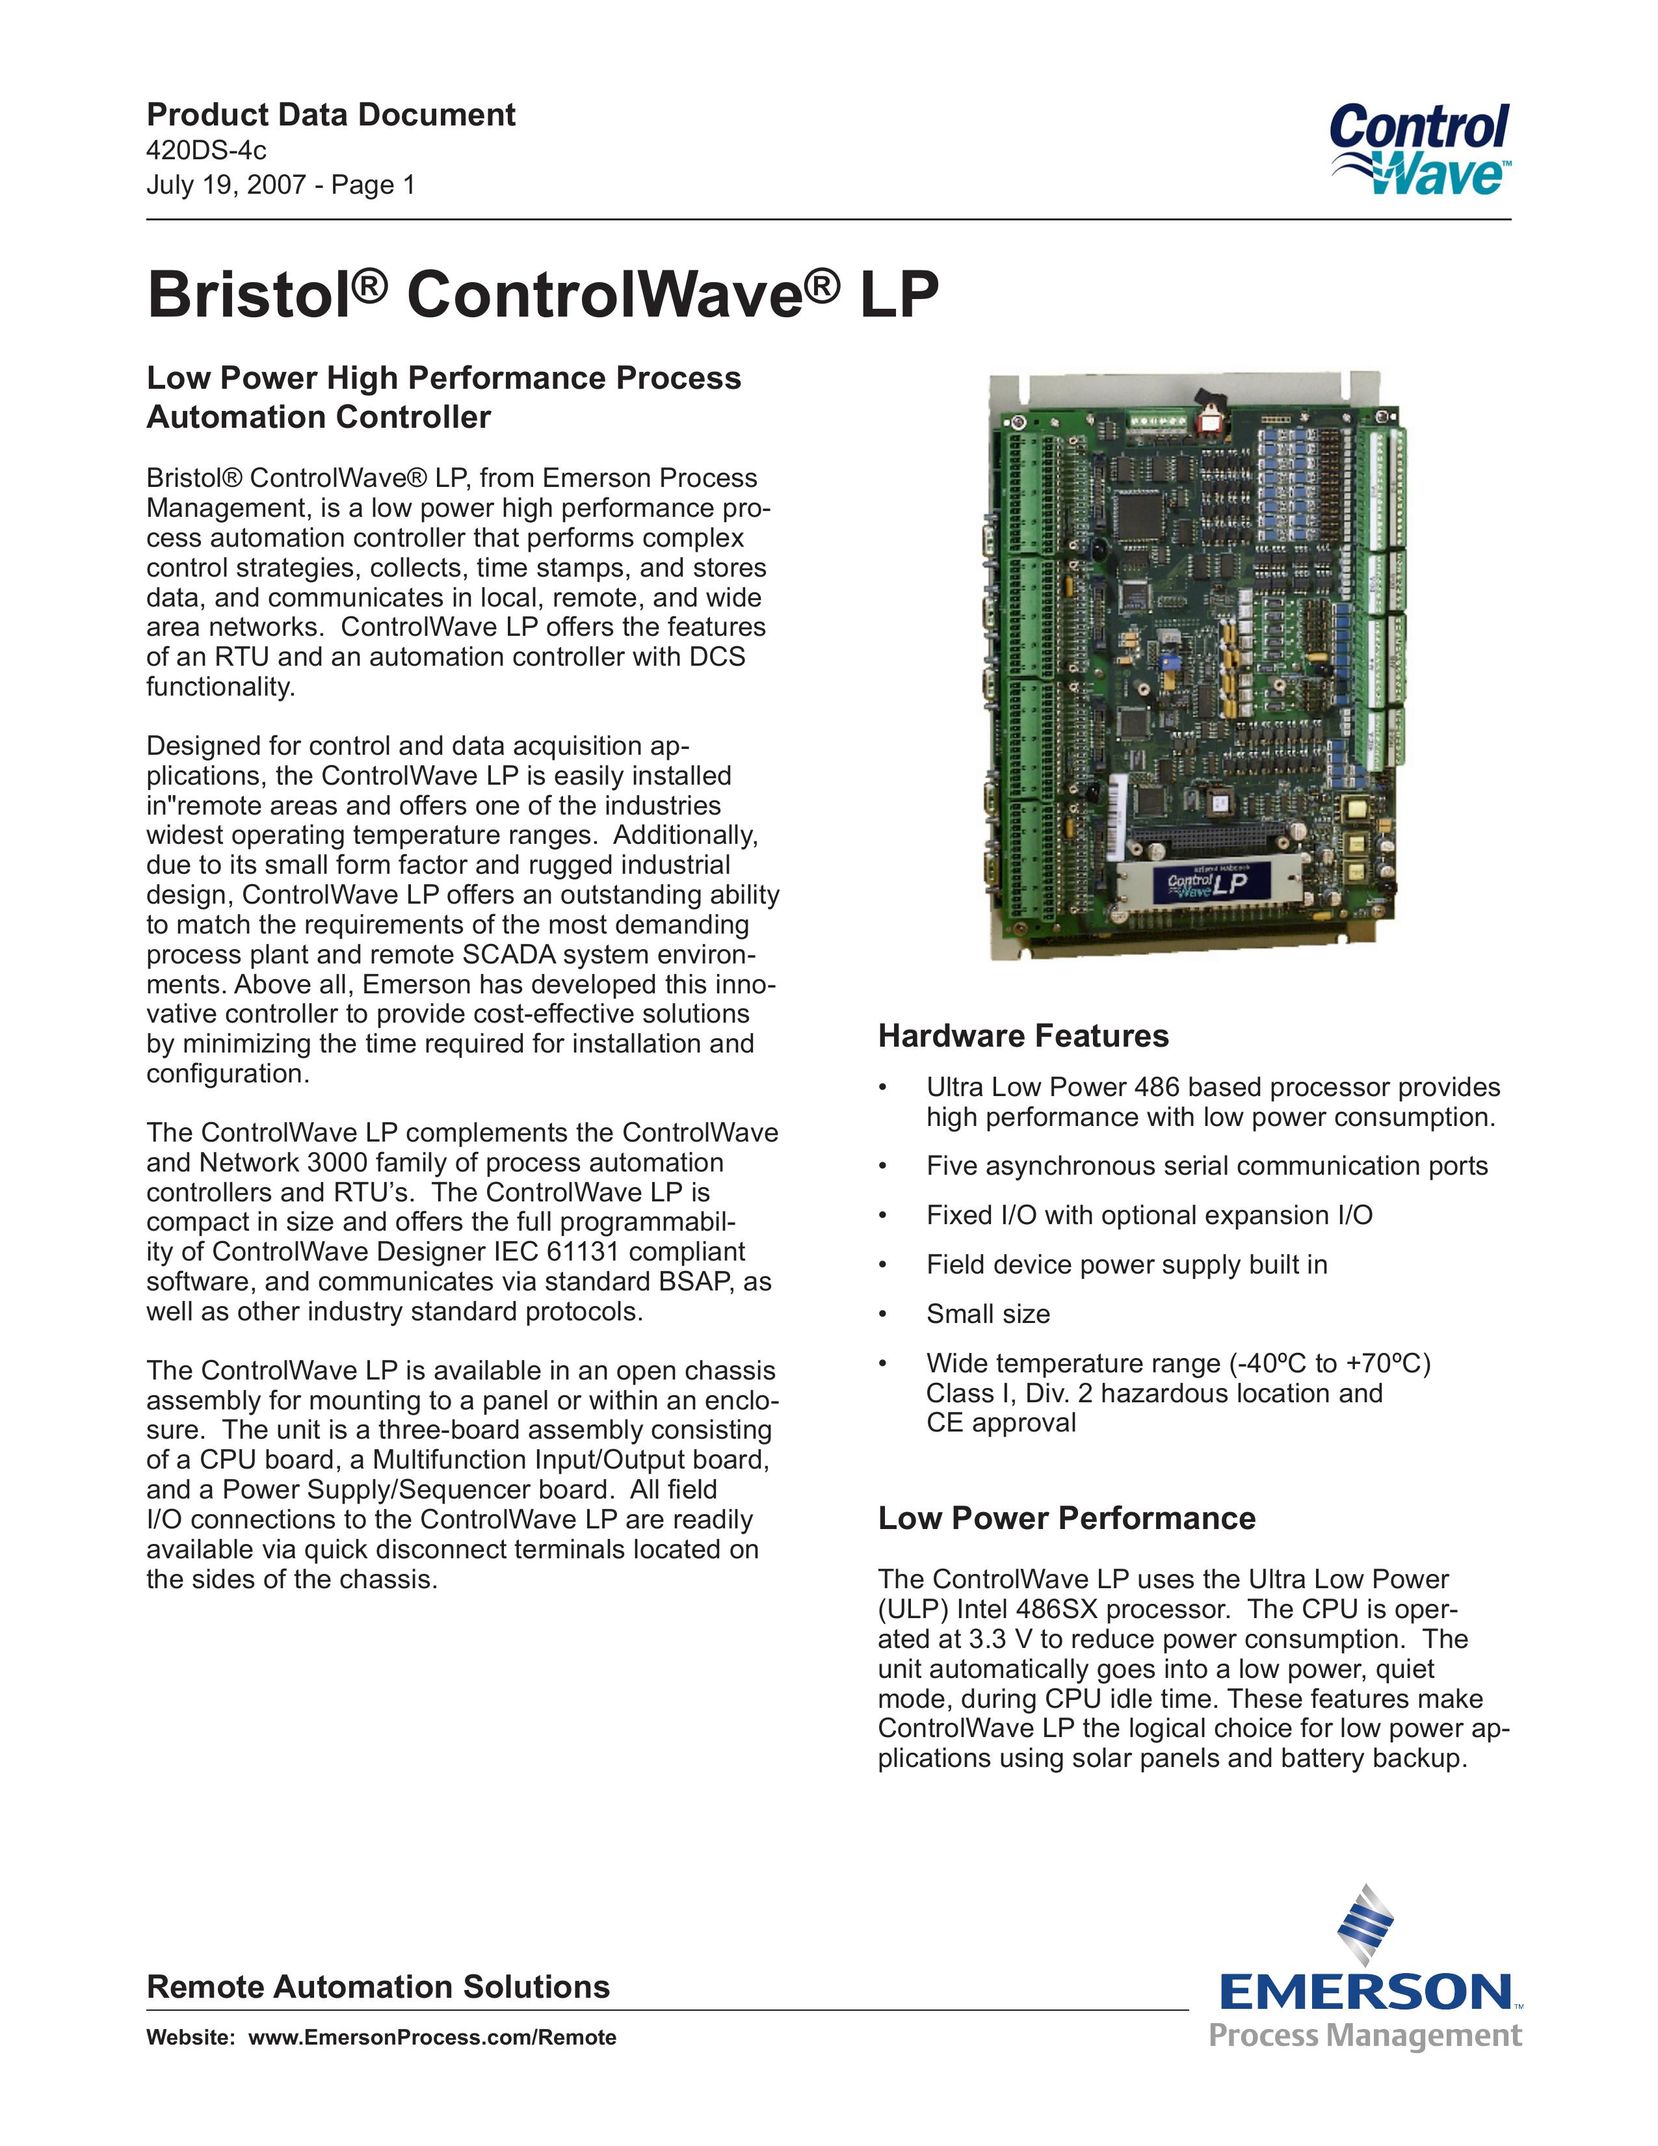 Emerson Process Management ControlWave LP Network Card User Manual